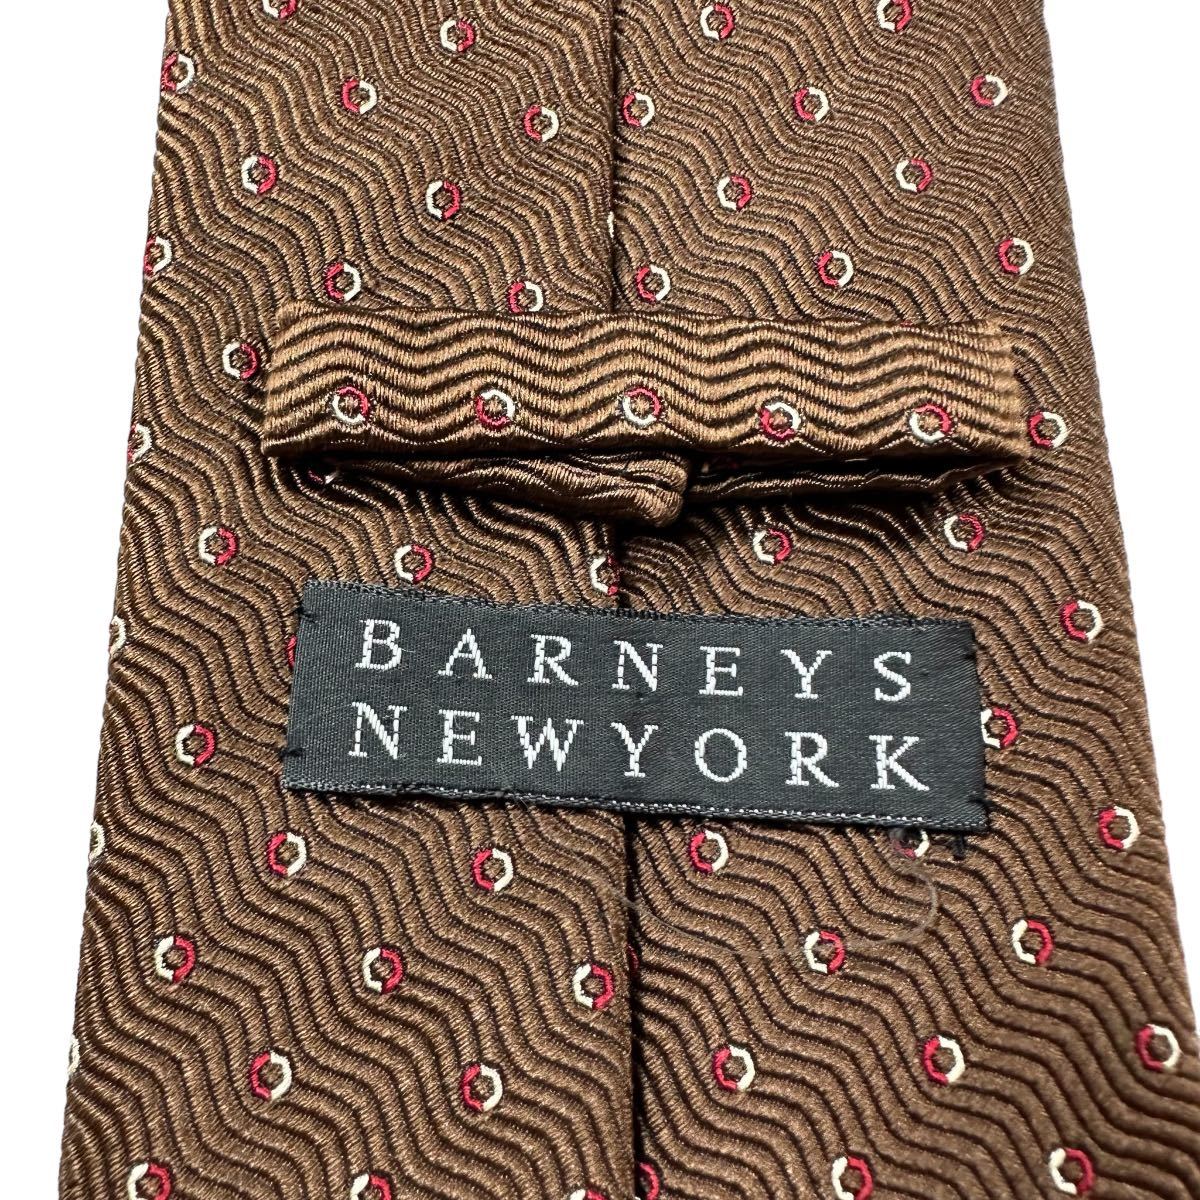 BARNEYS NEWYORK バーニーズ ニューヨーク人気ブランド 高級シルク